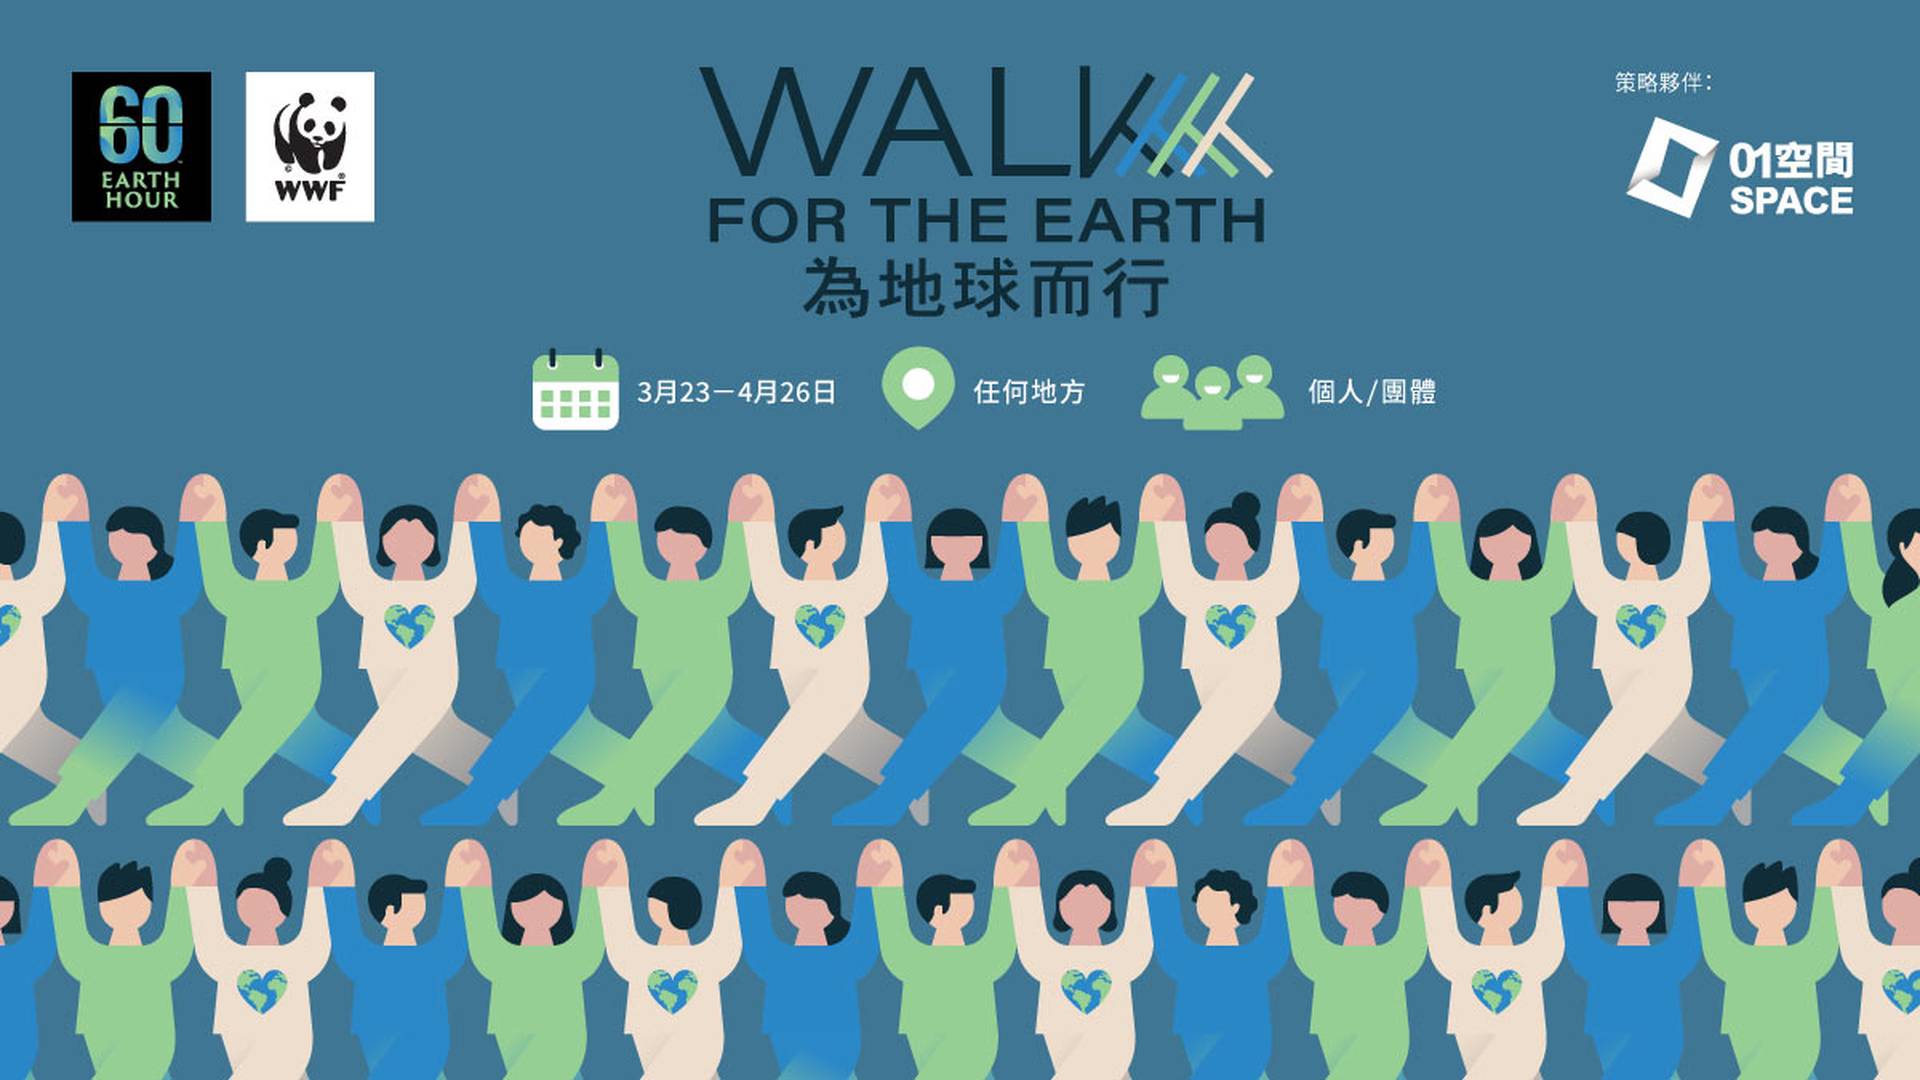 WWF「為地球而行」Walk For The Earth - 線上步行籌款活動